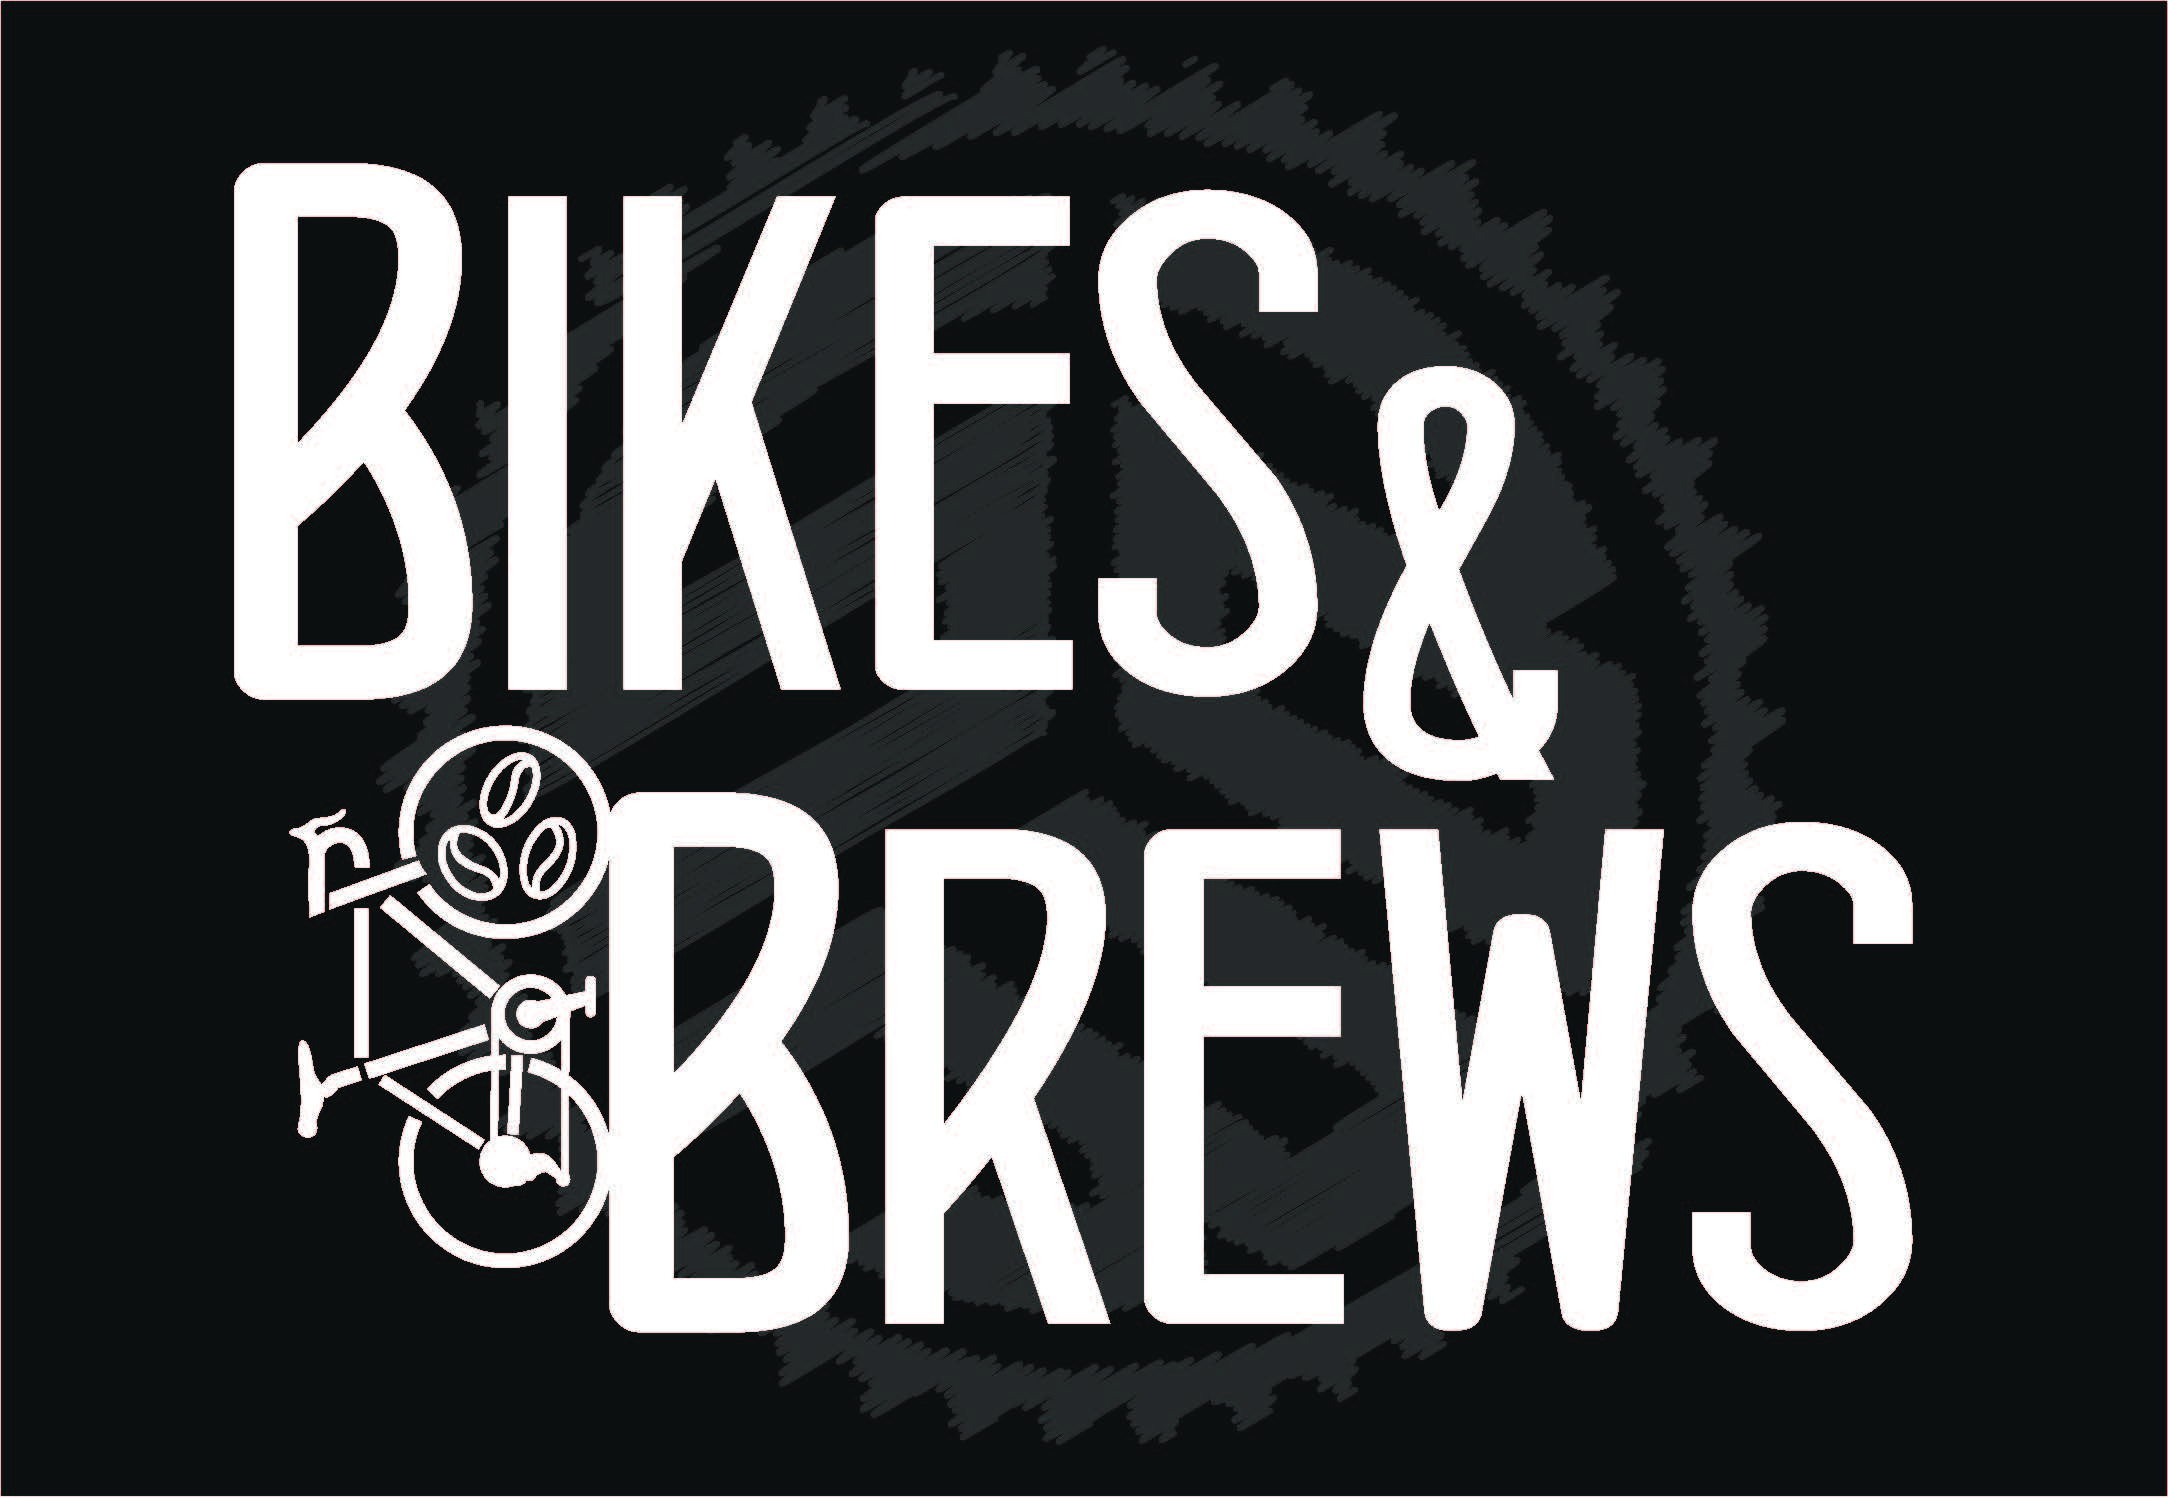 Bikes & Brews